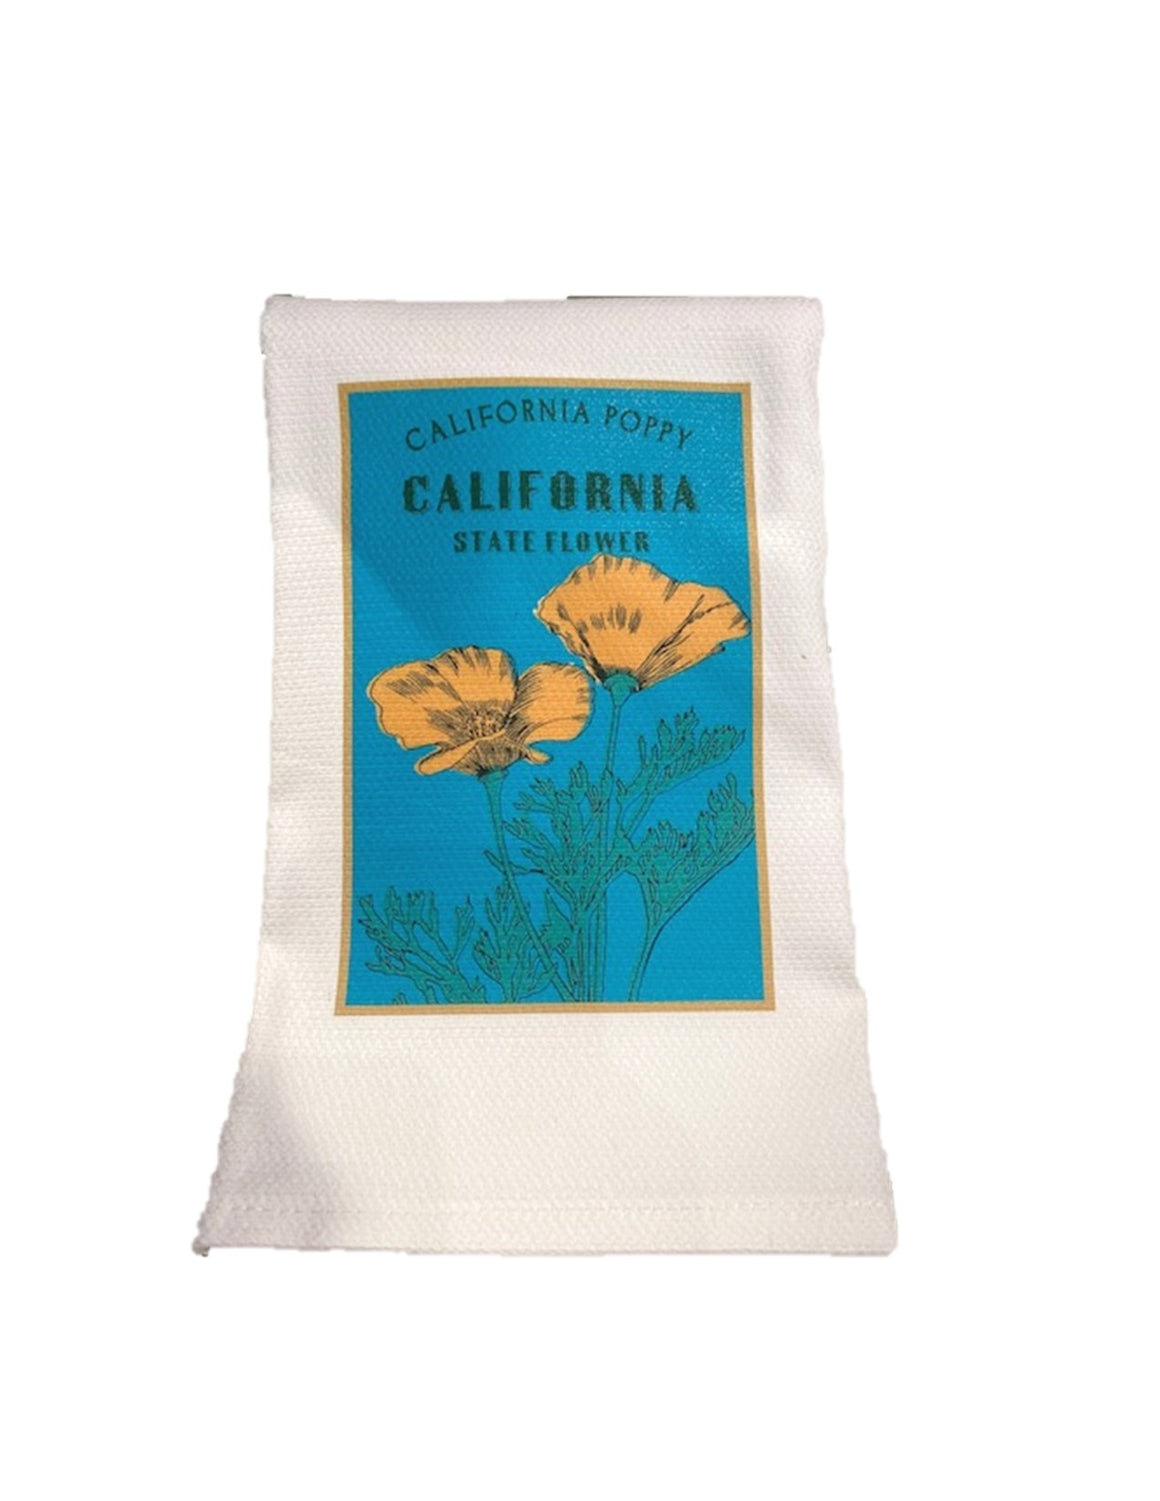 Pacific Swell Designs Tea Towels - Santa Barbara California Poppies